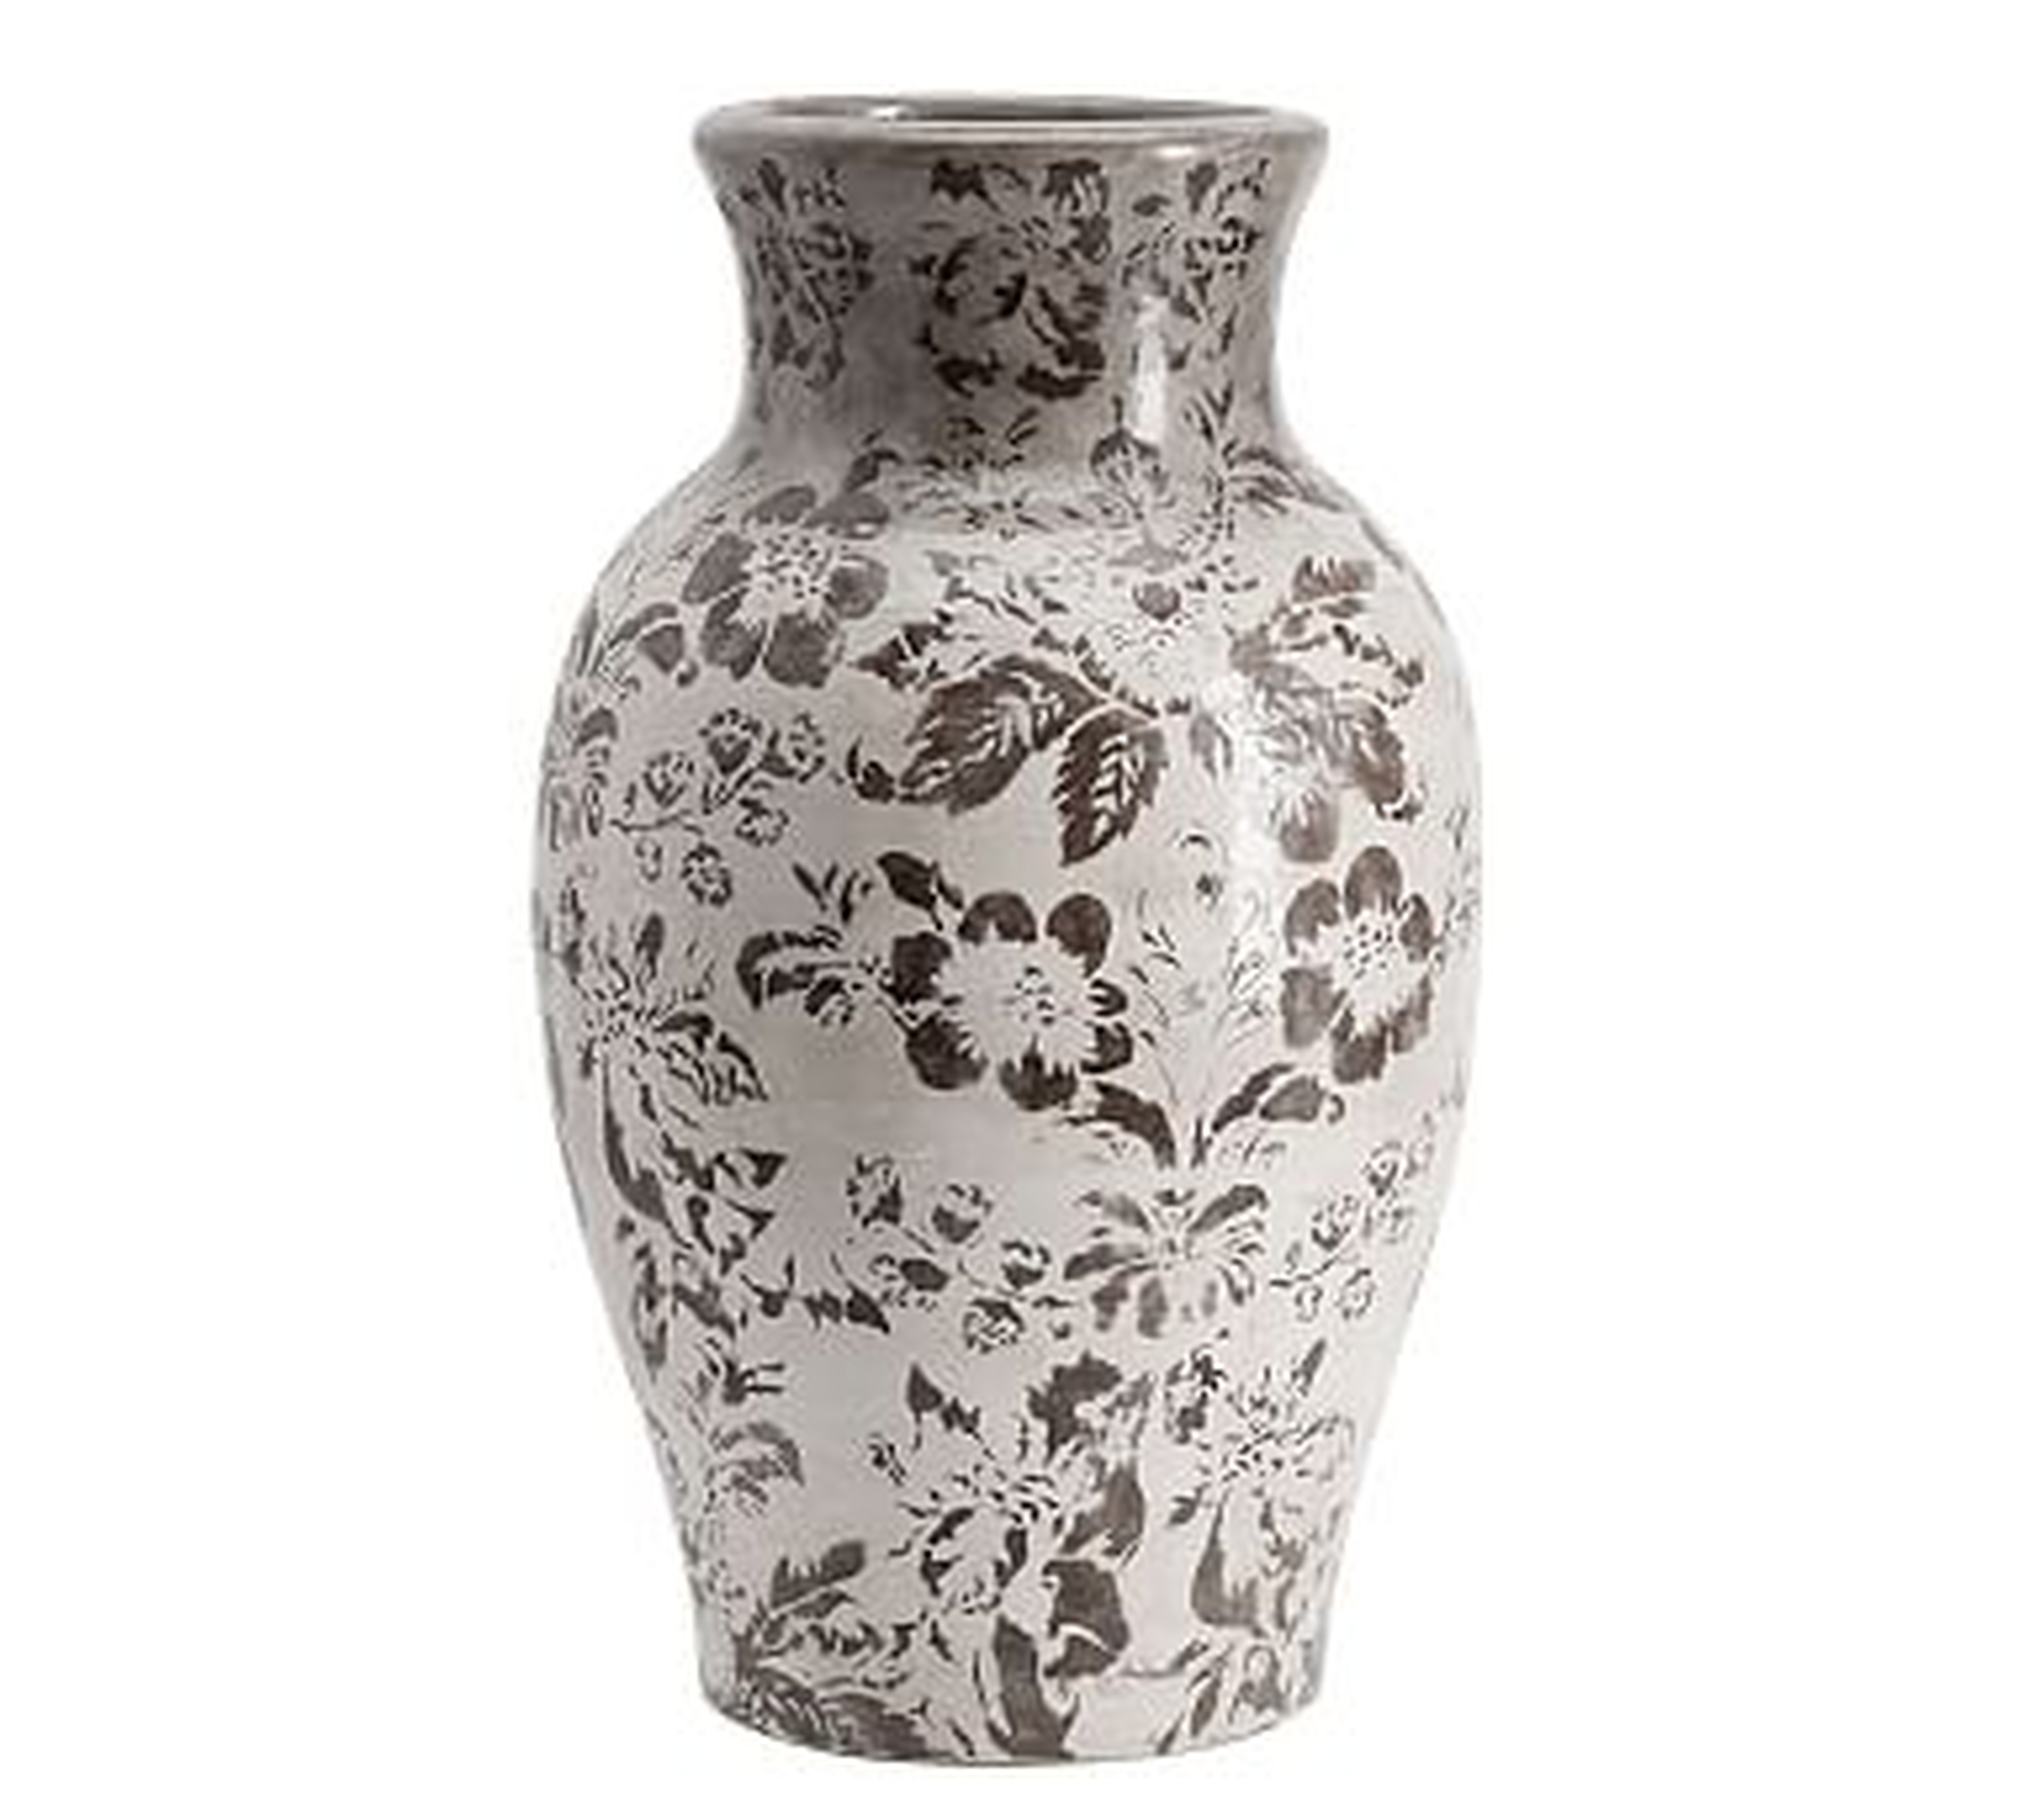 Collette Floral Vase, Gray, Large - Pottery Barn